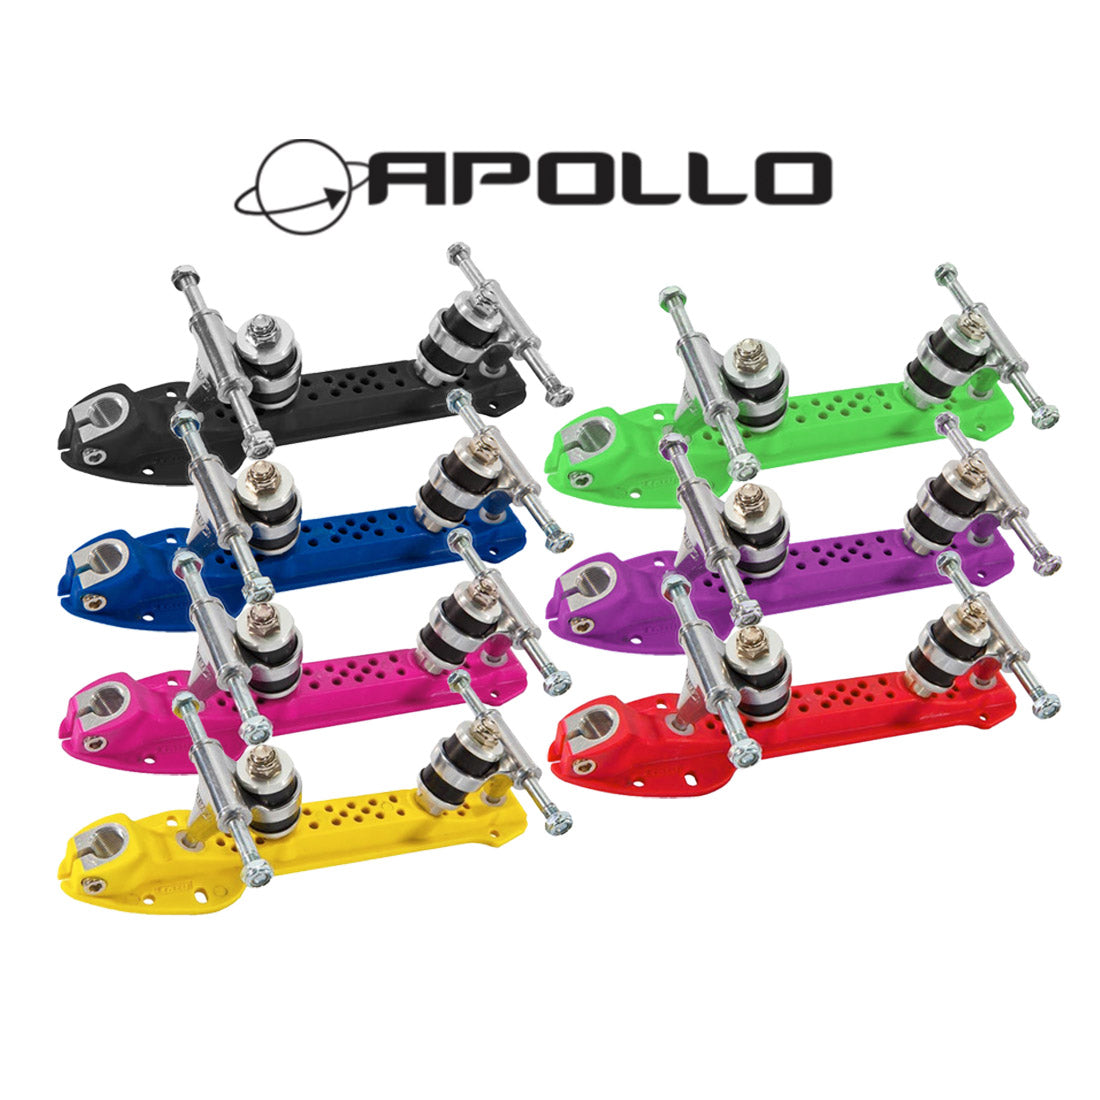 Crazy Apollo Derby Plate Roller Skate Plates